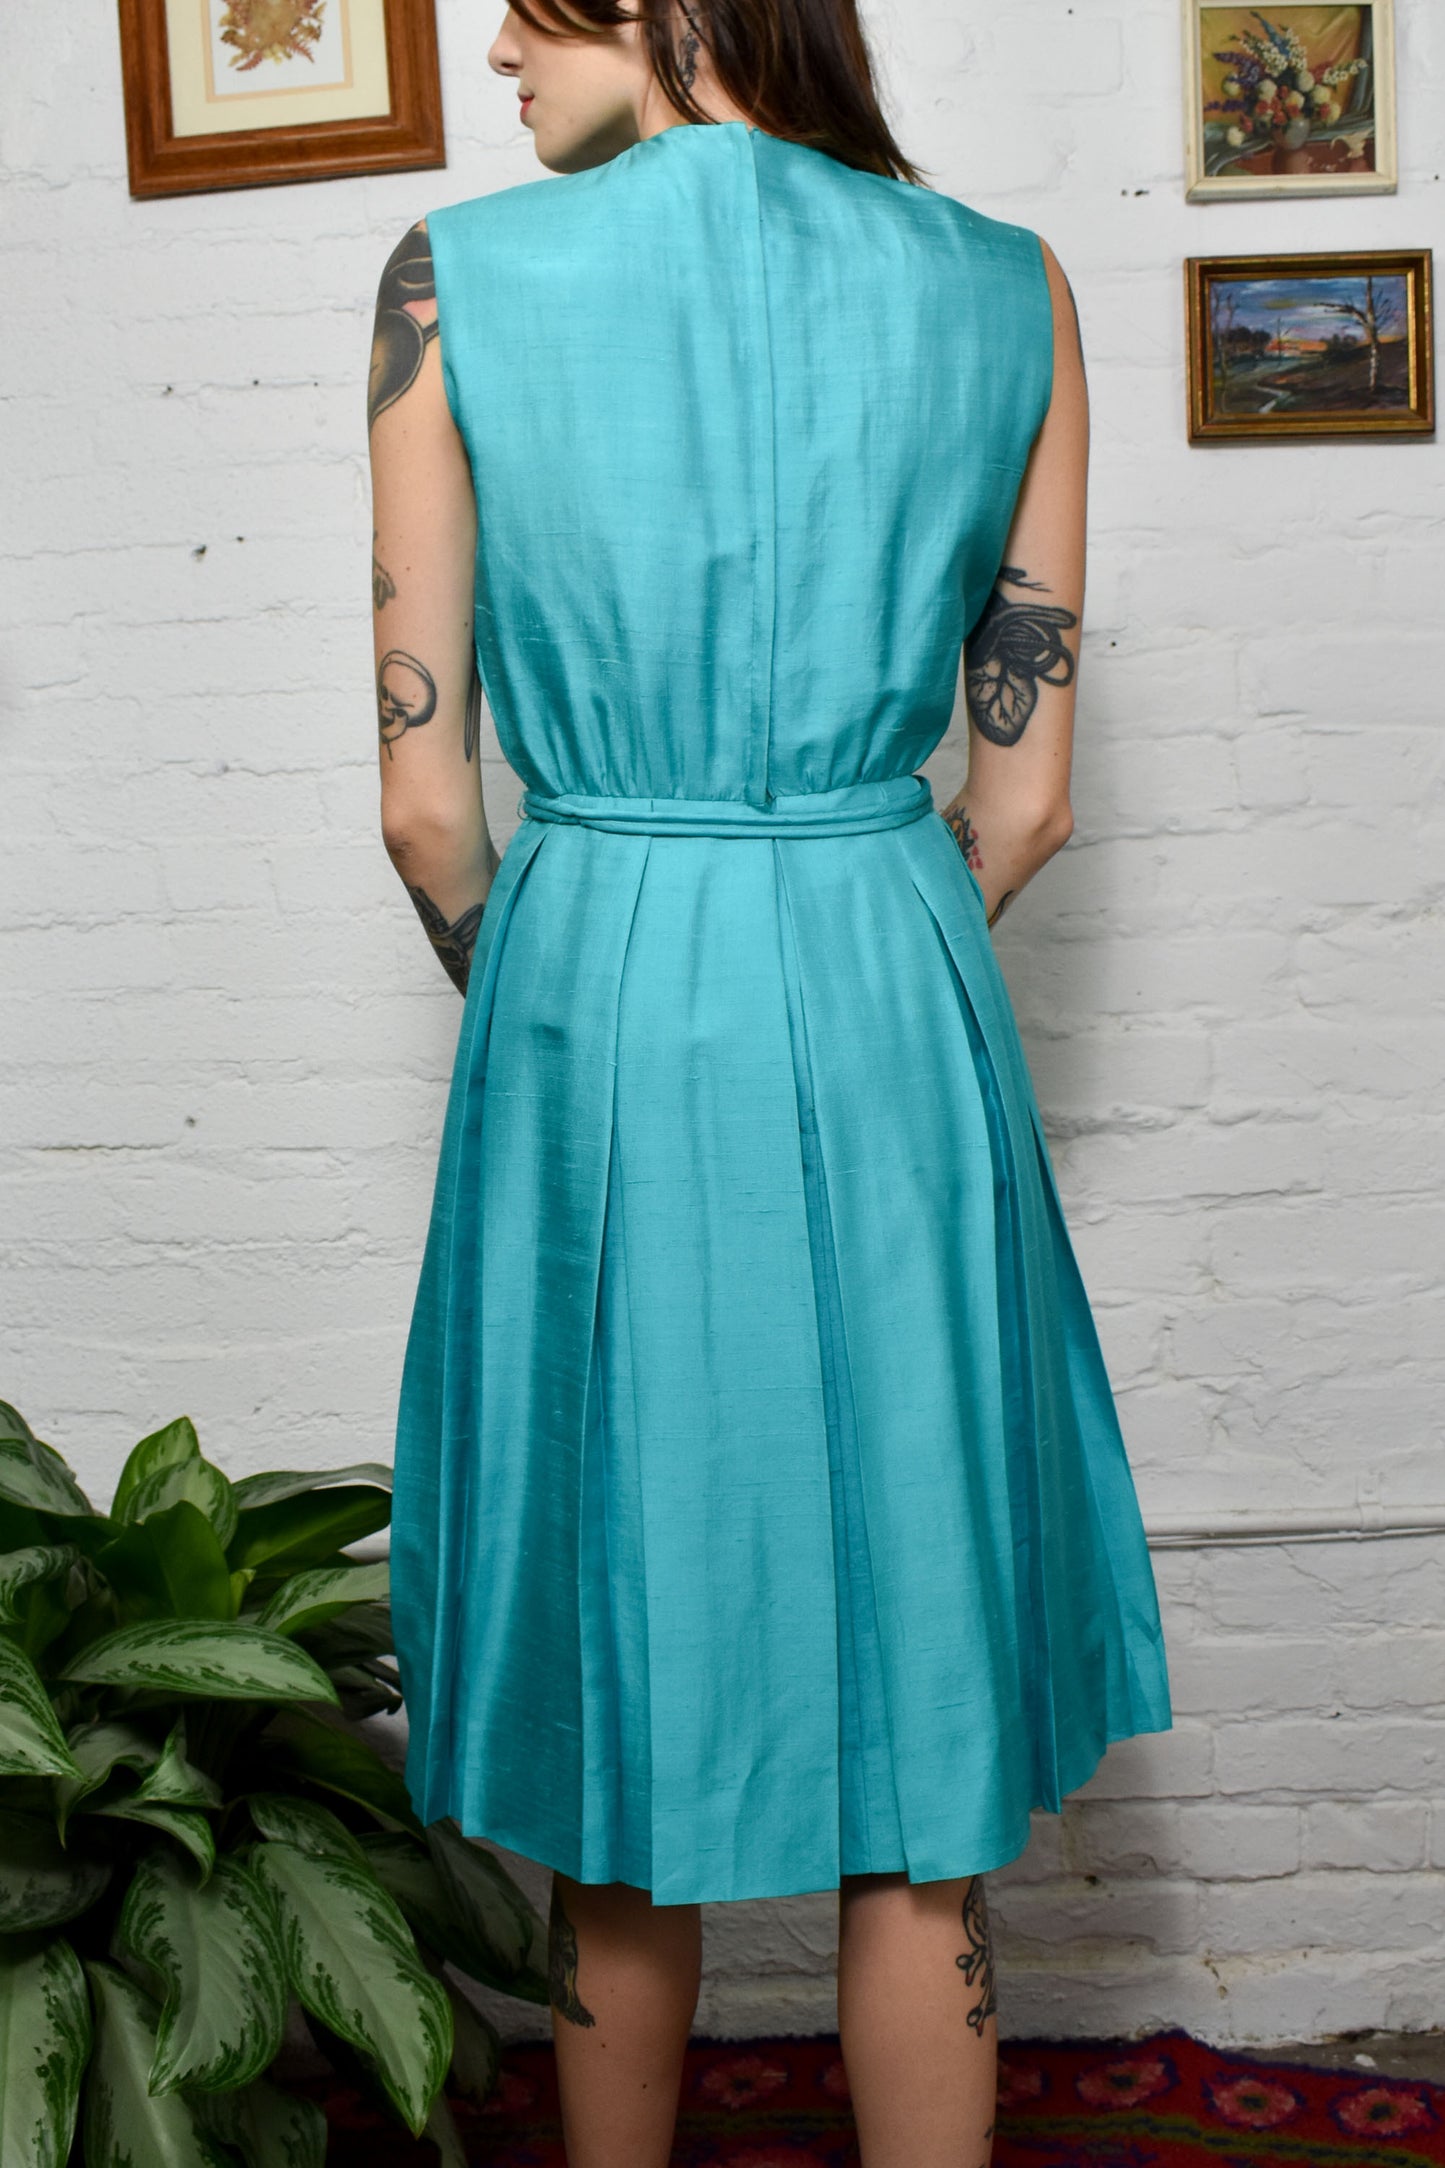 Vintage 50's "Beckman's" Electric Blue Dress Designed by Mancini